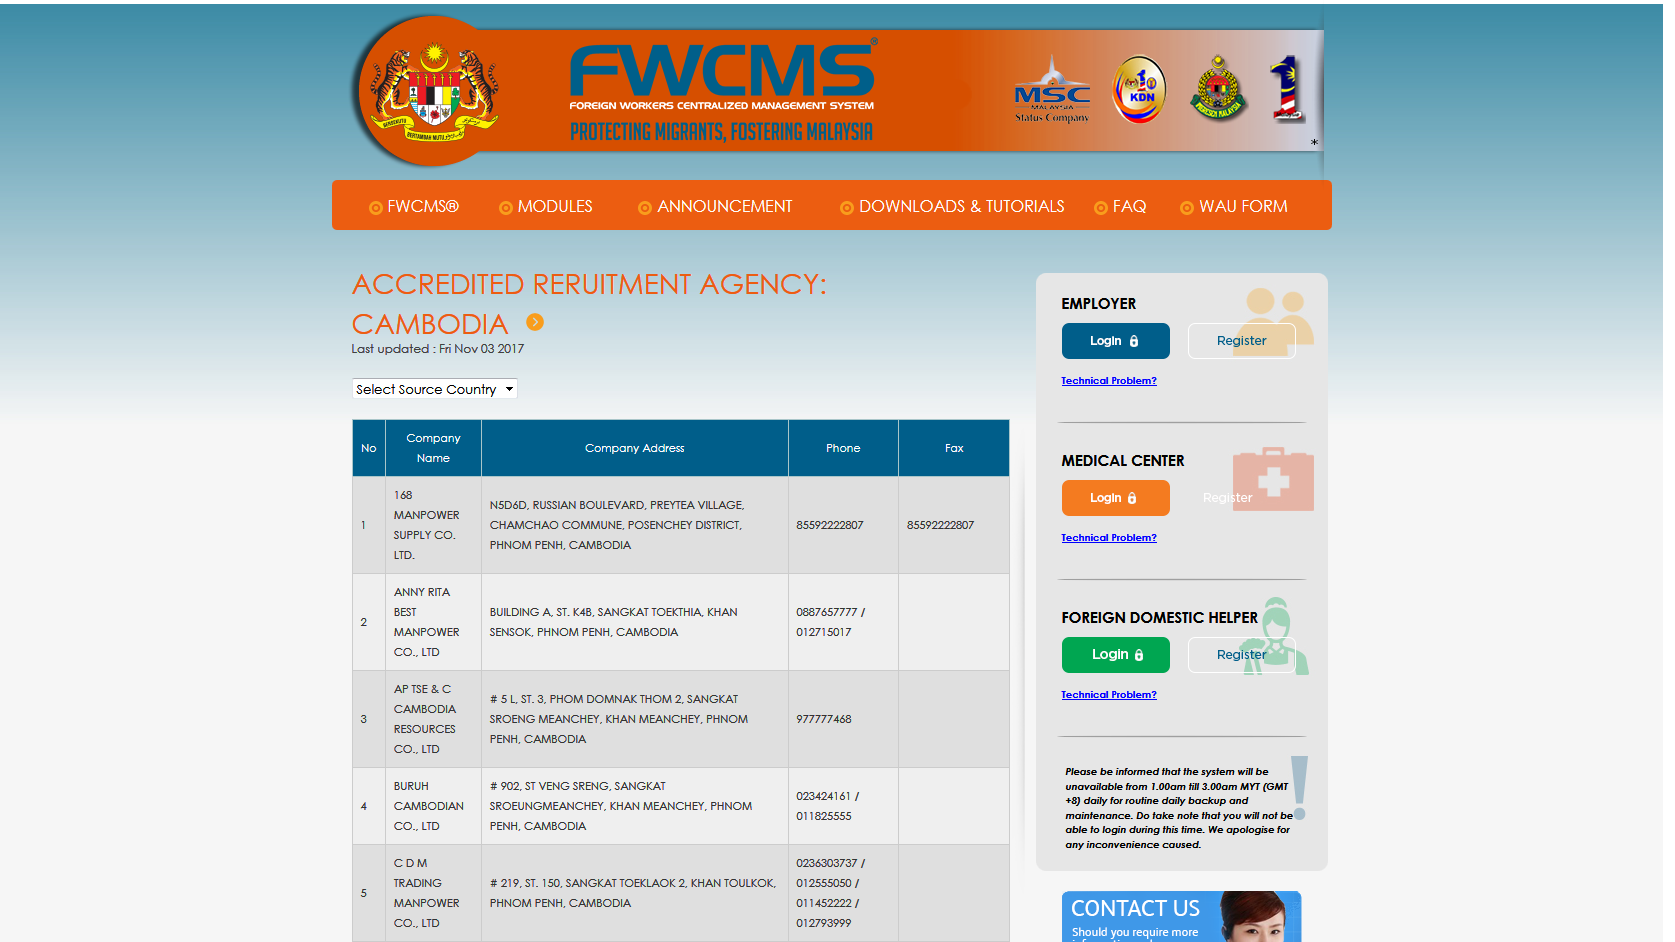 FWCMS - Recruitment agencies